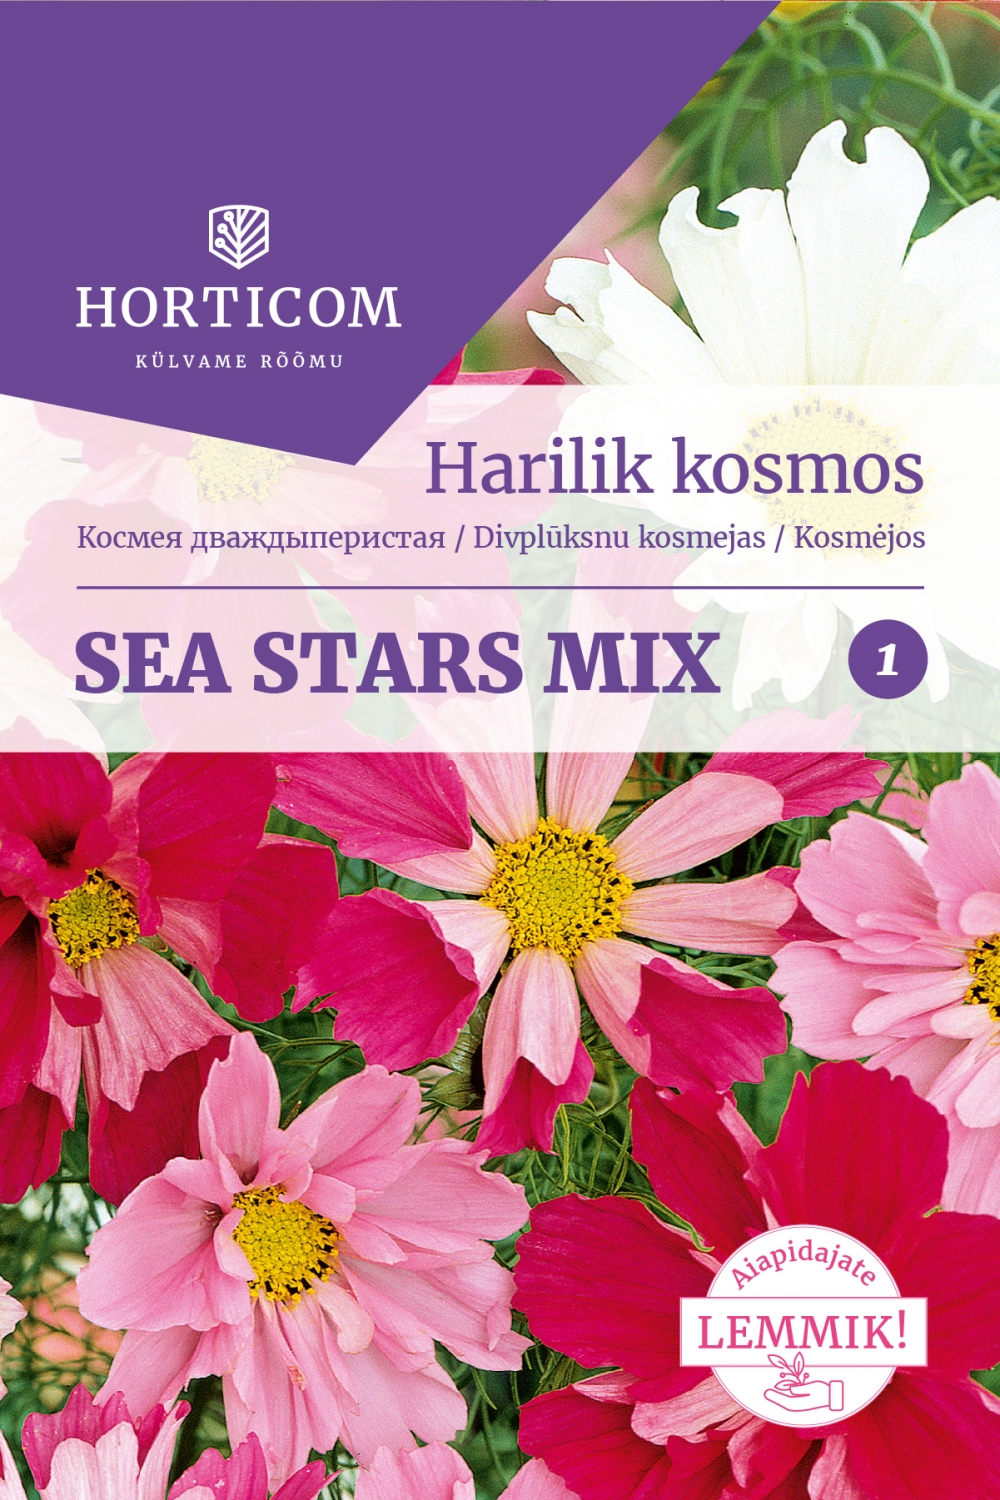 Harilik kosmos Sea Stars Mix 1g 1